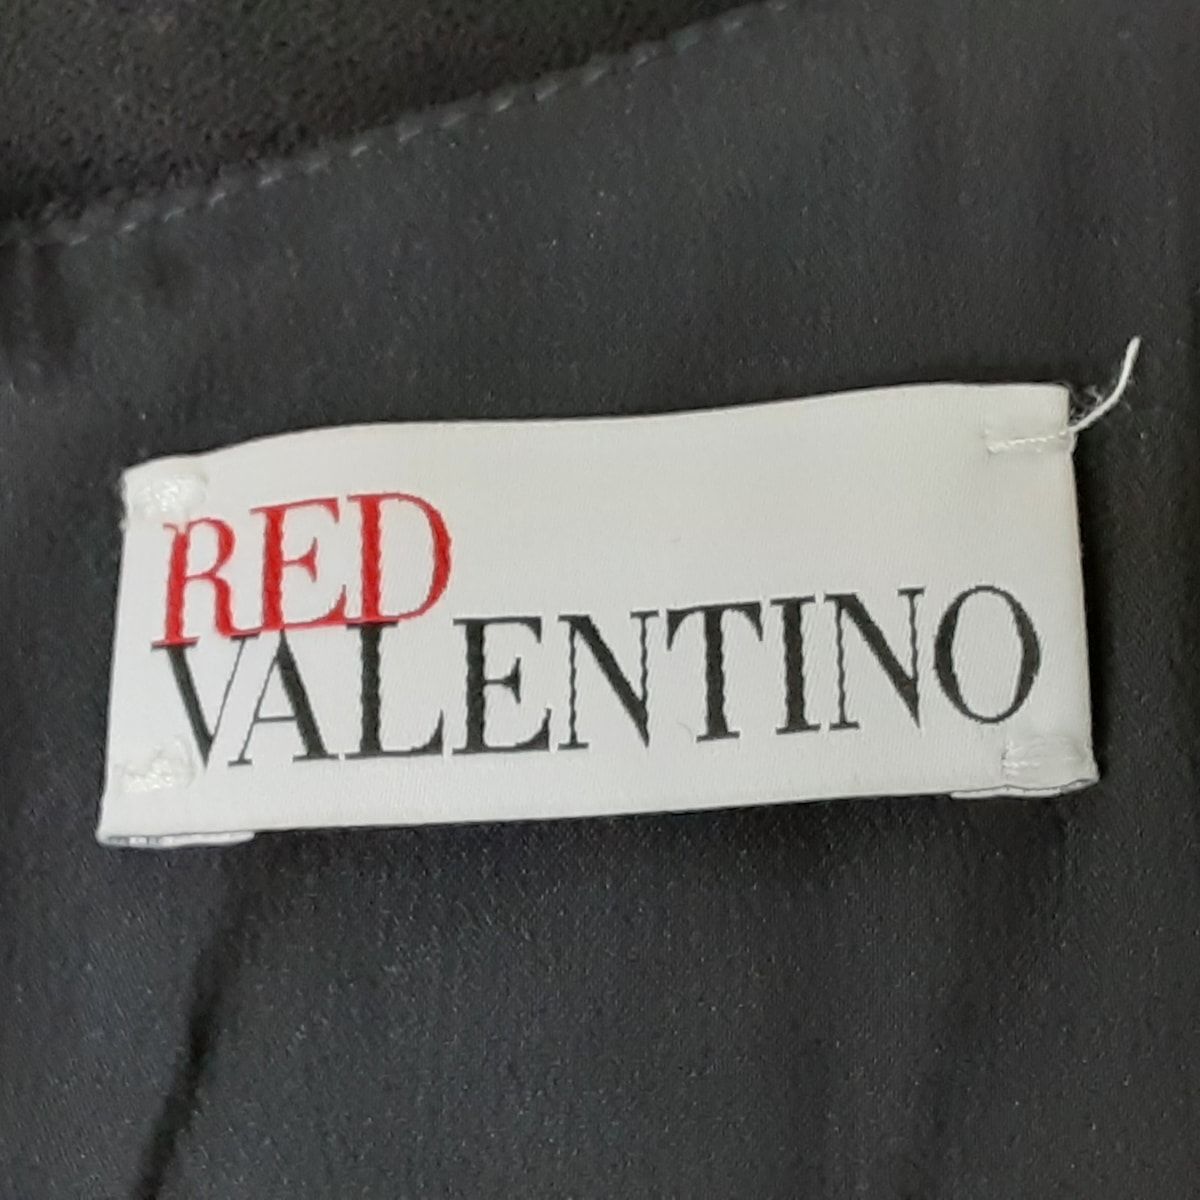 RED VALENTINO(レッドバレンチノ) ワンピース サイズ38 M レディース美 